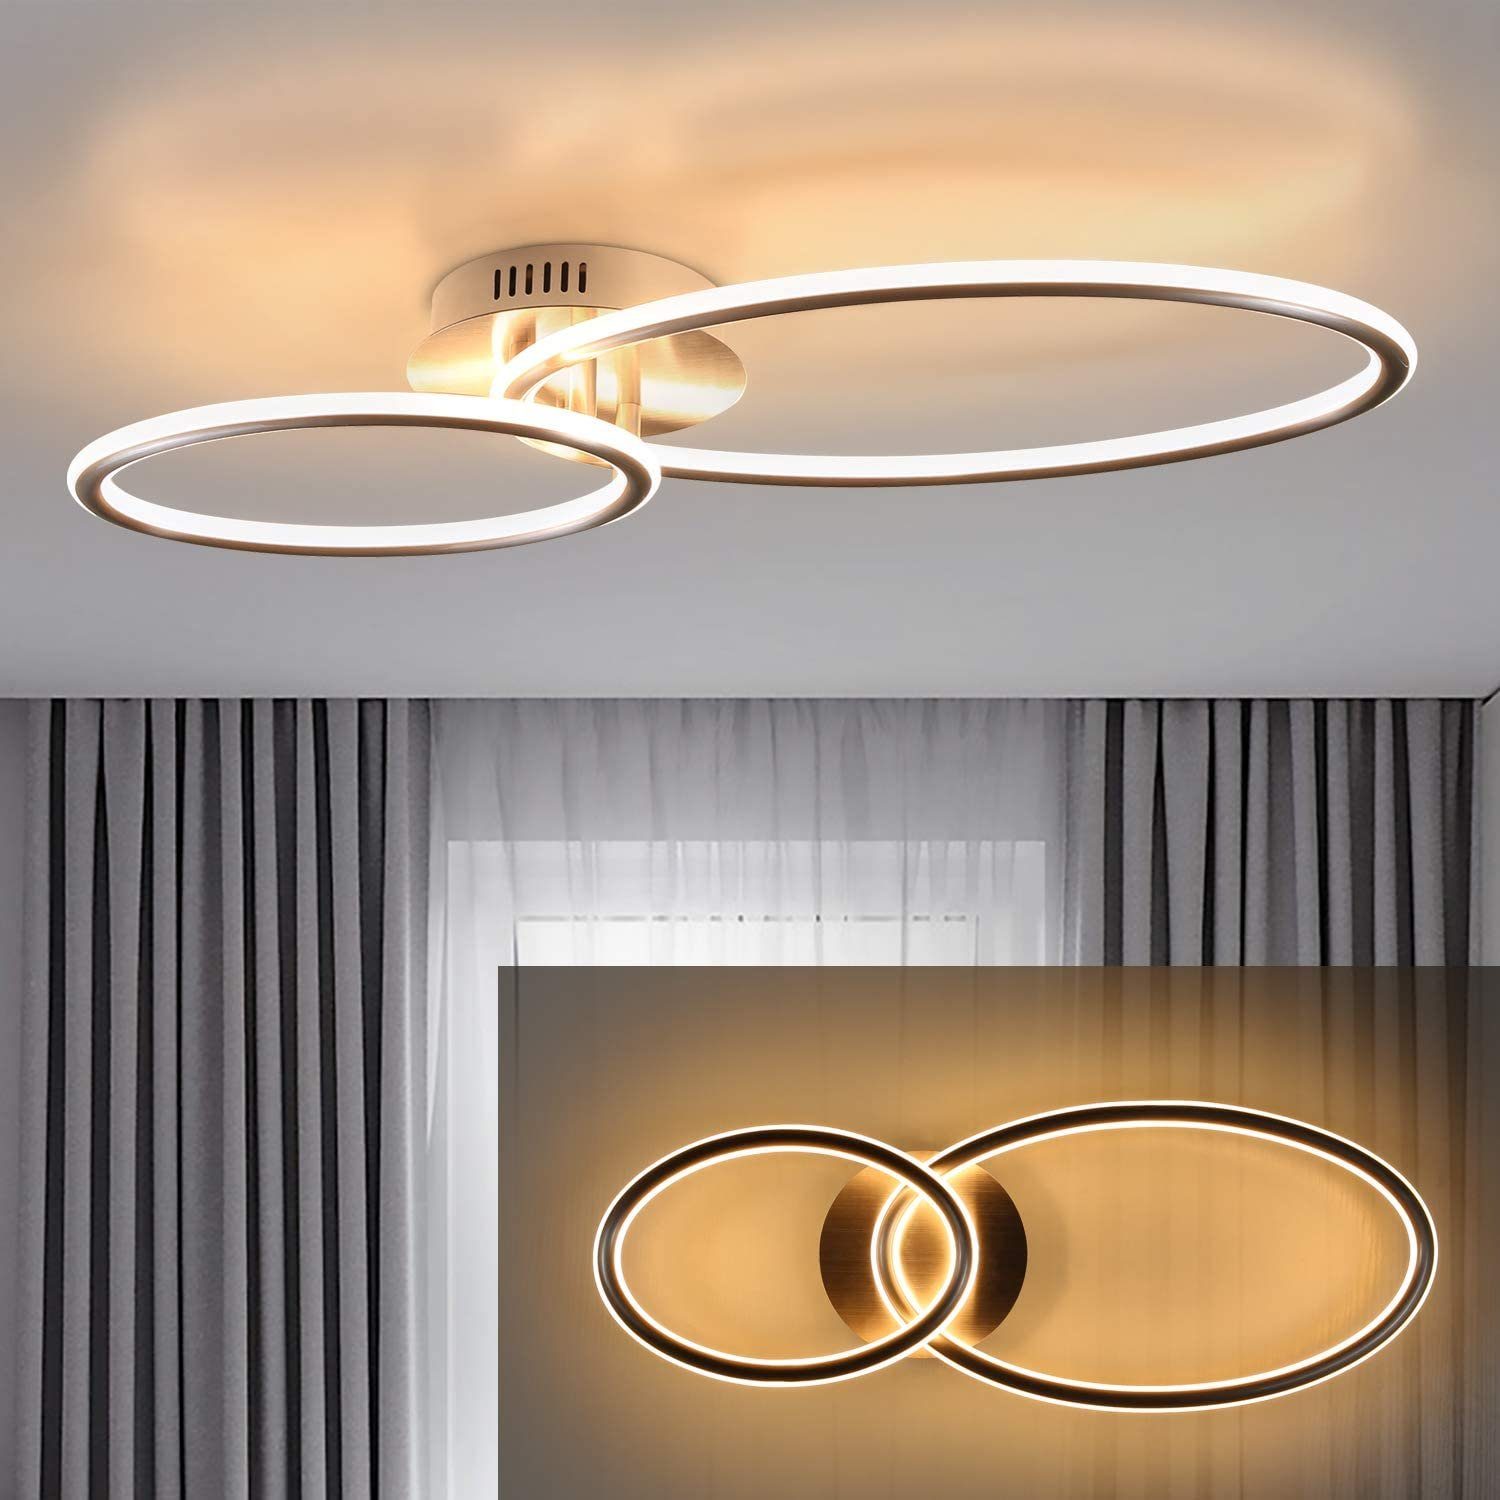 LED Decken Lampe Schlaf Zimmer Ring Beleuchtung Strahler Lampe verstellbar Spots 